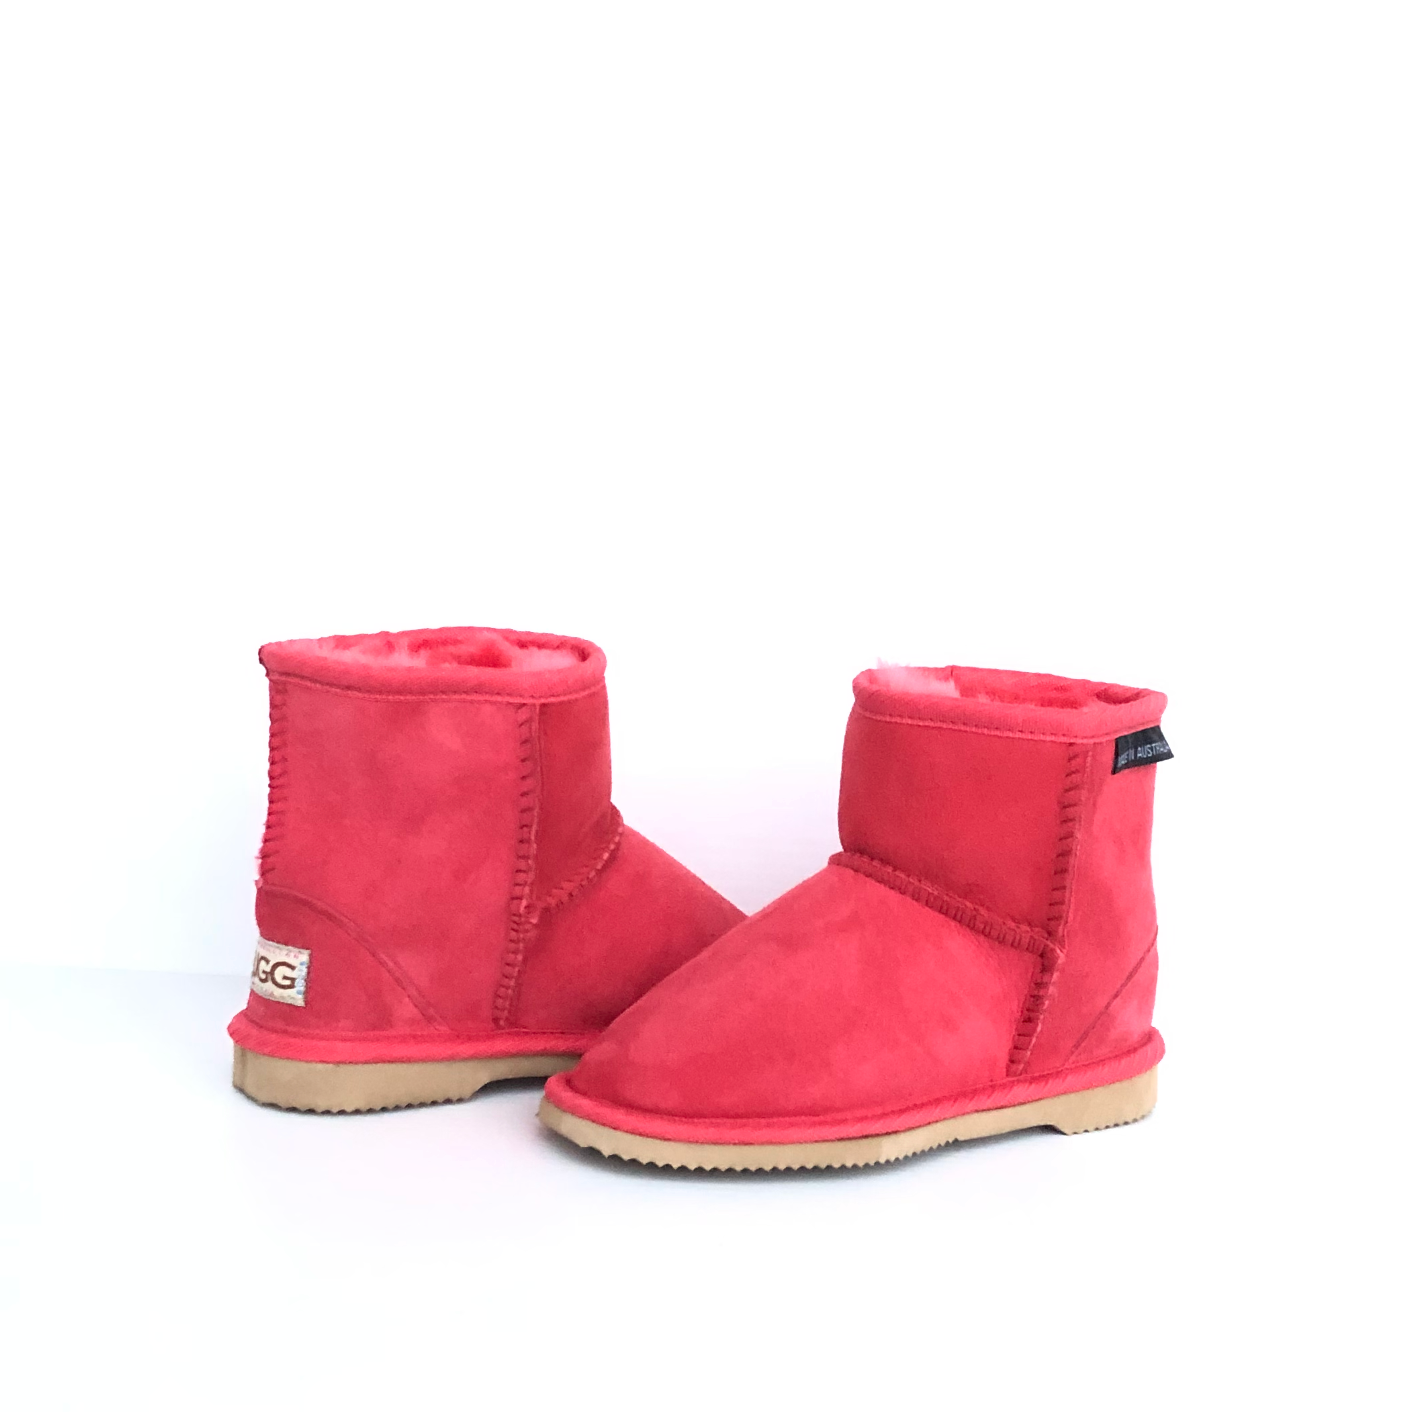 Kids ultra short boots in scarlet